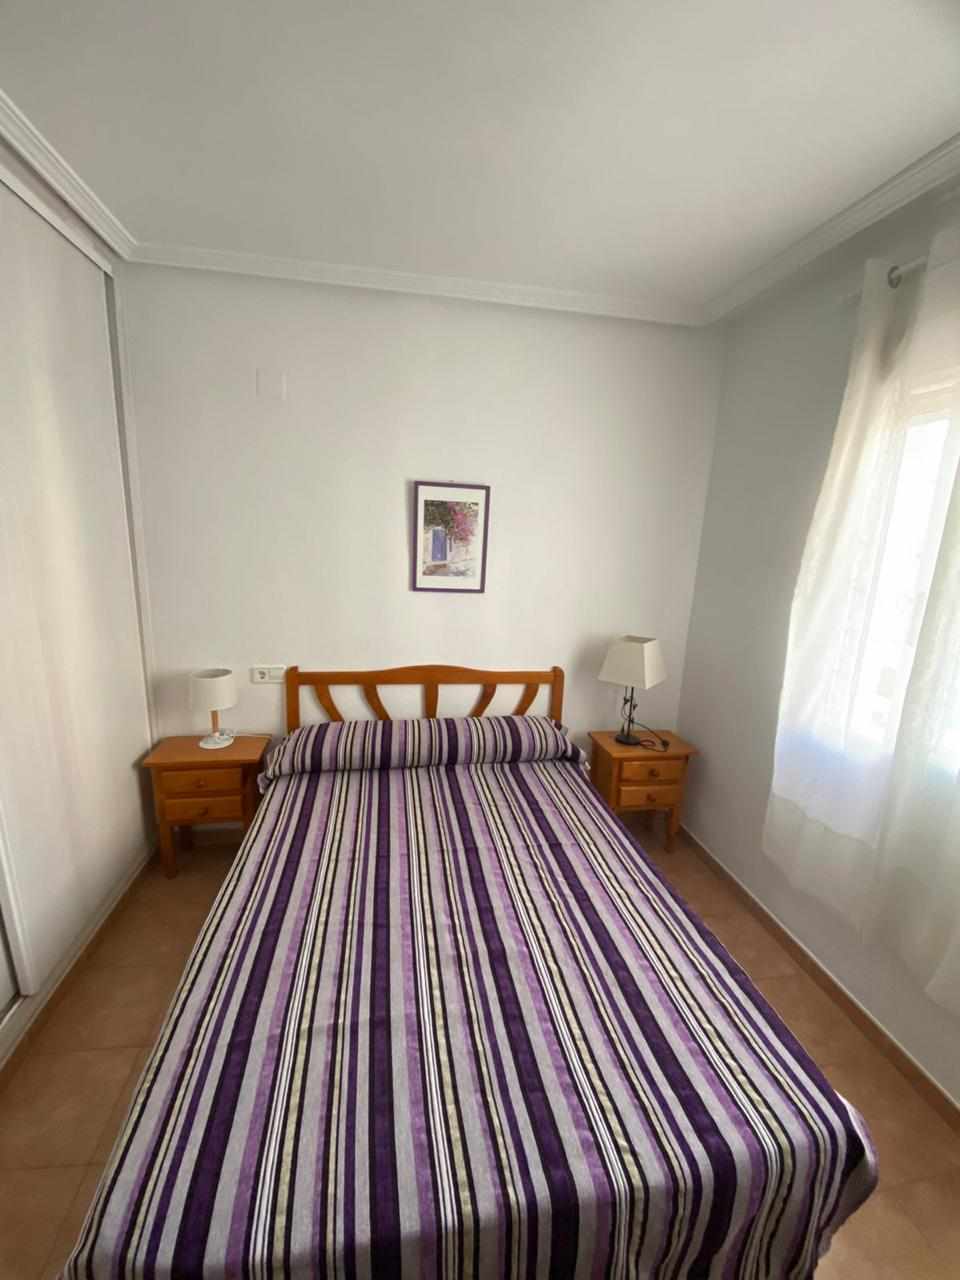 Marina Golf III apartment : Apartment for Rent in Mojácar, Almería